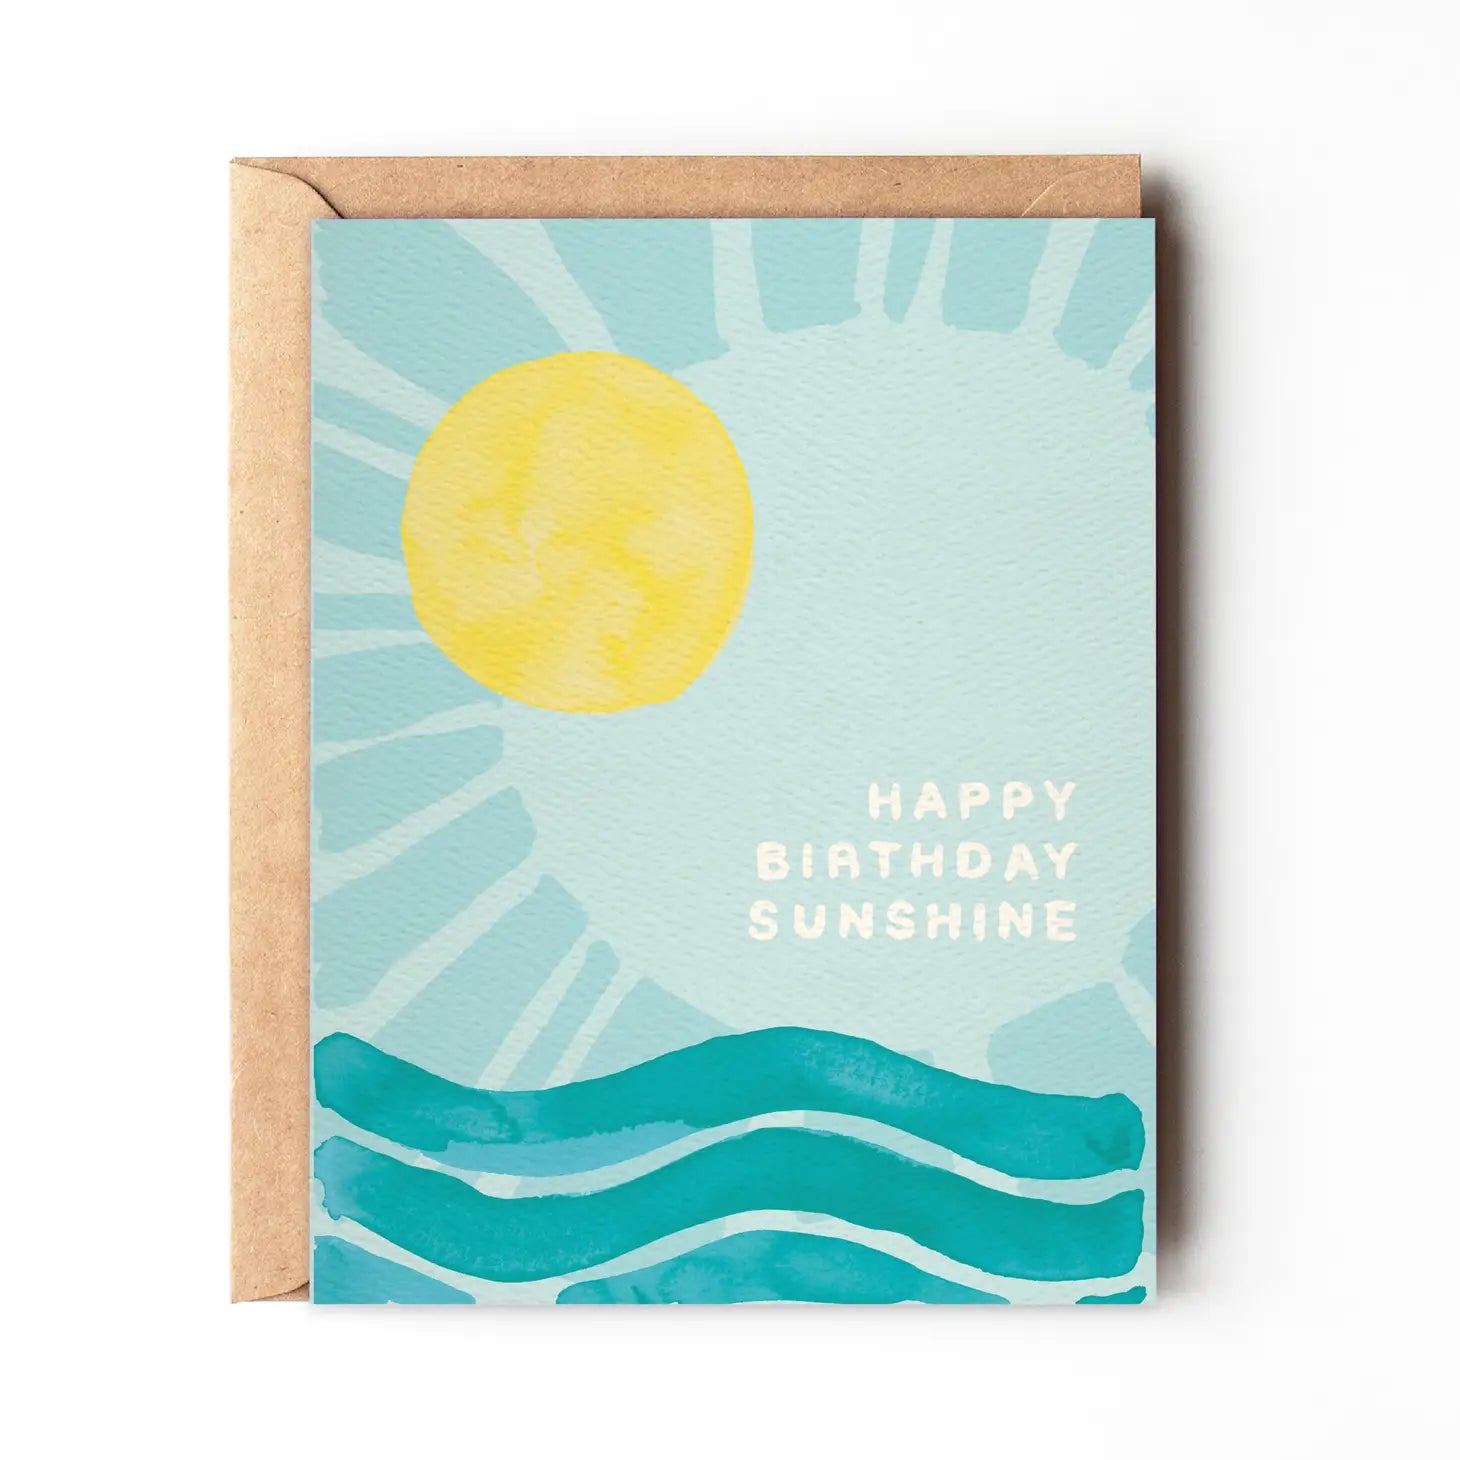 Happy Birthday Sunshine - Uplifting Summer Birthday Card